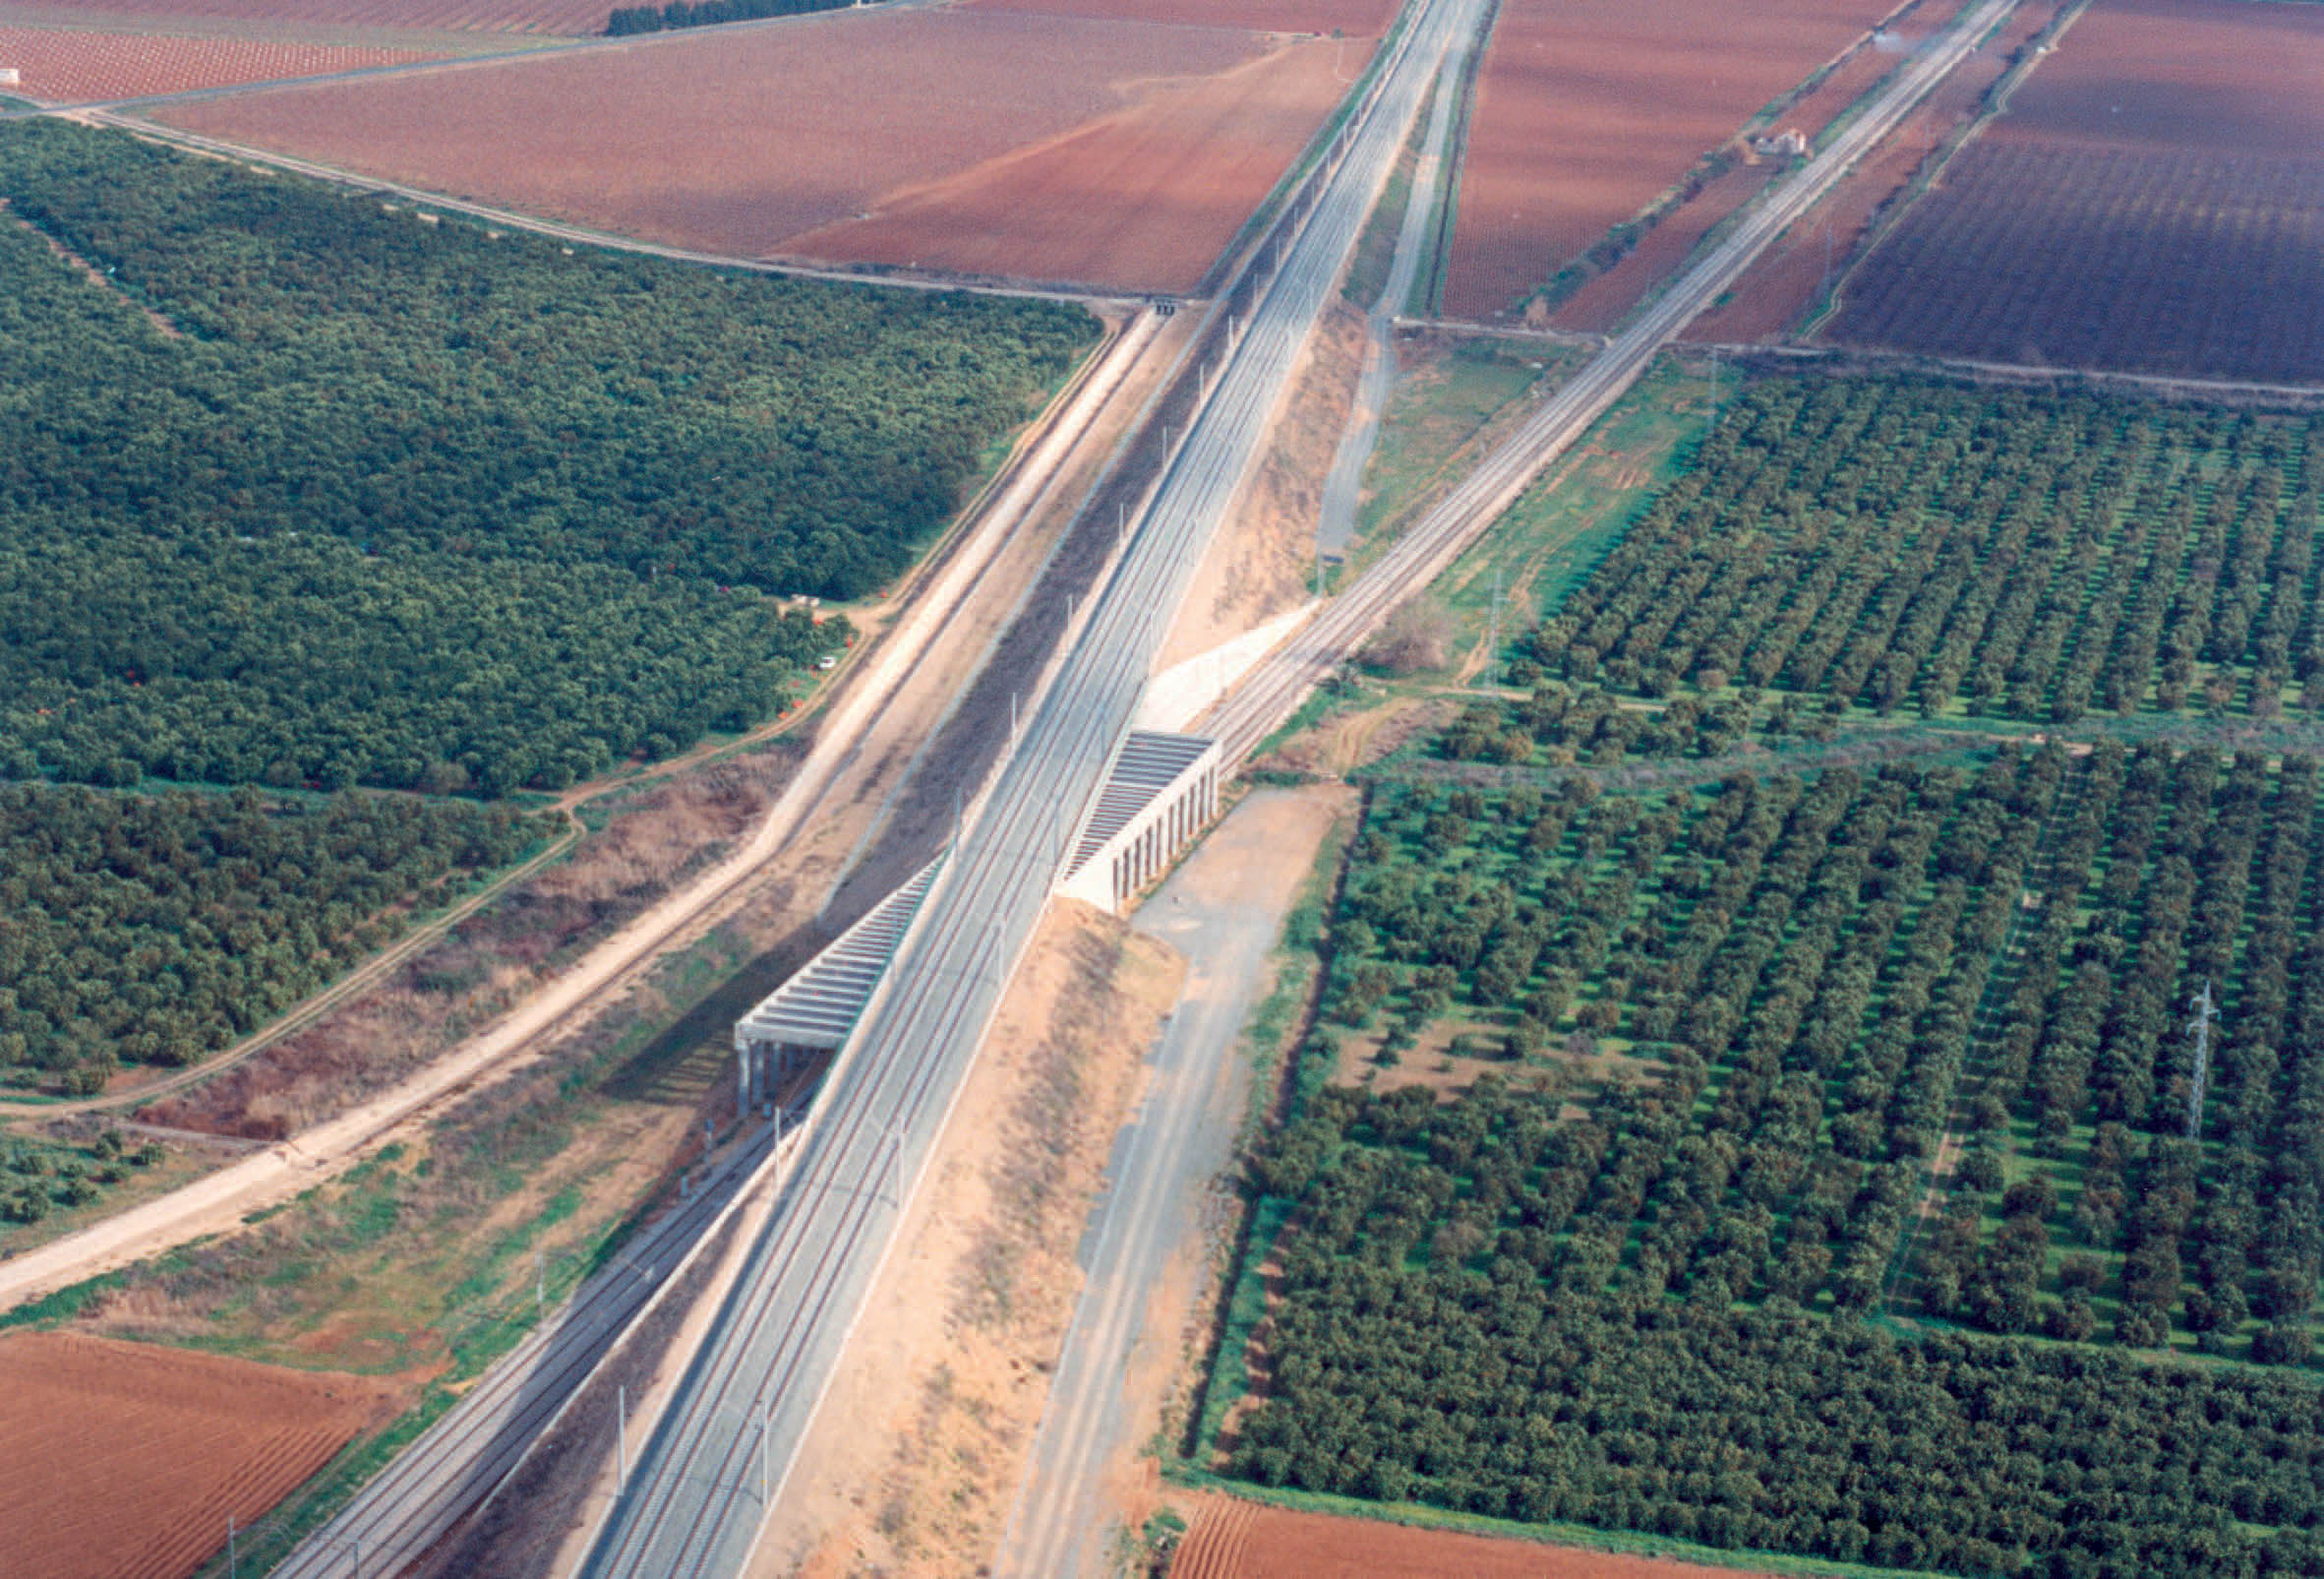 Aerial view Seville-Cádiz railway line